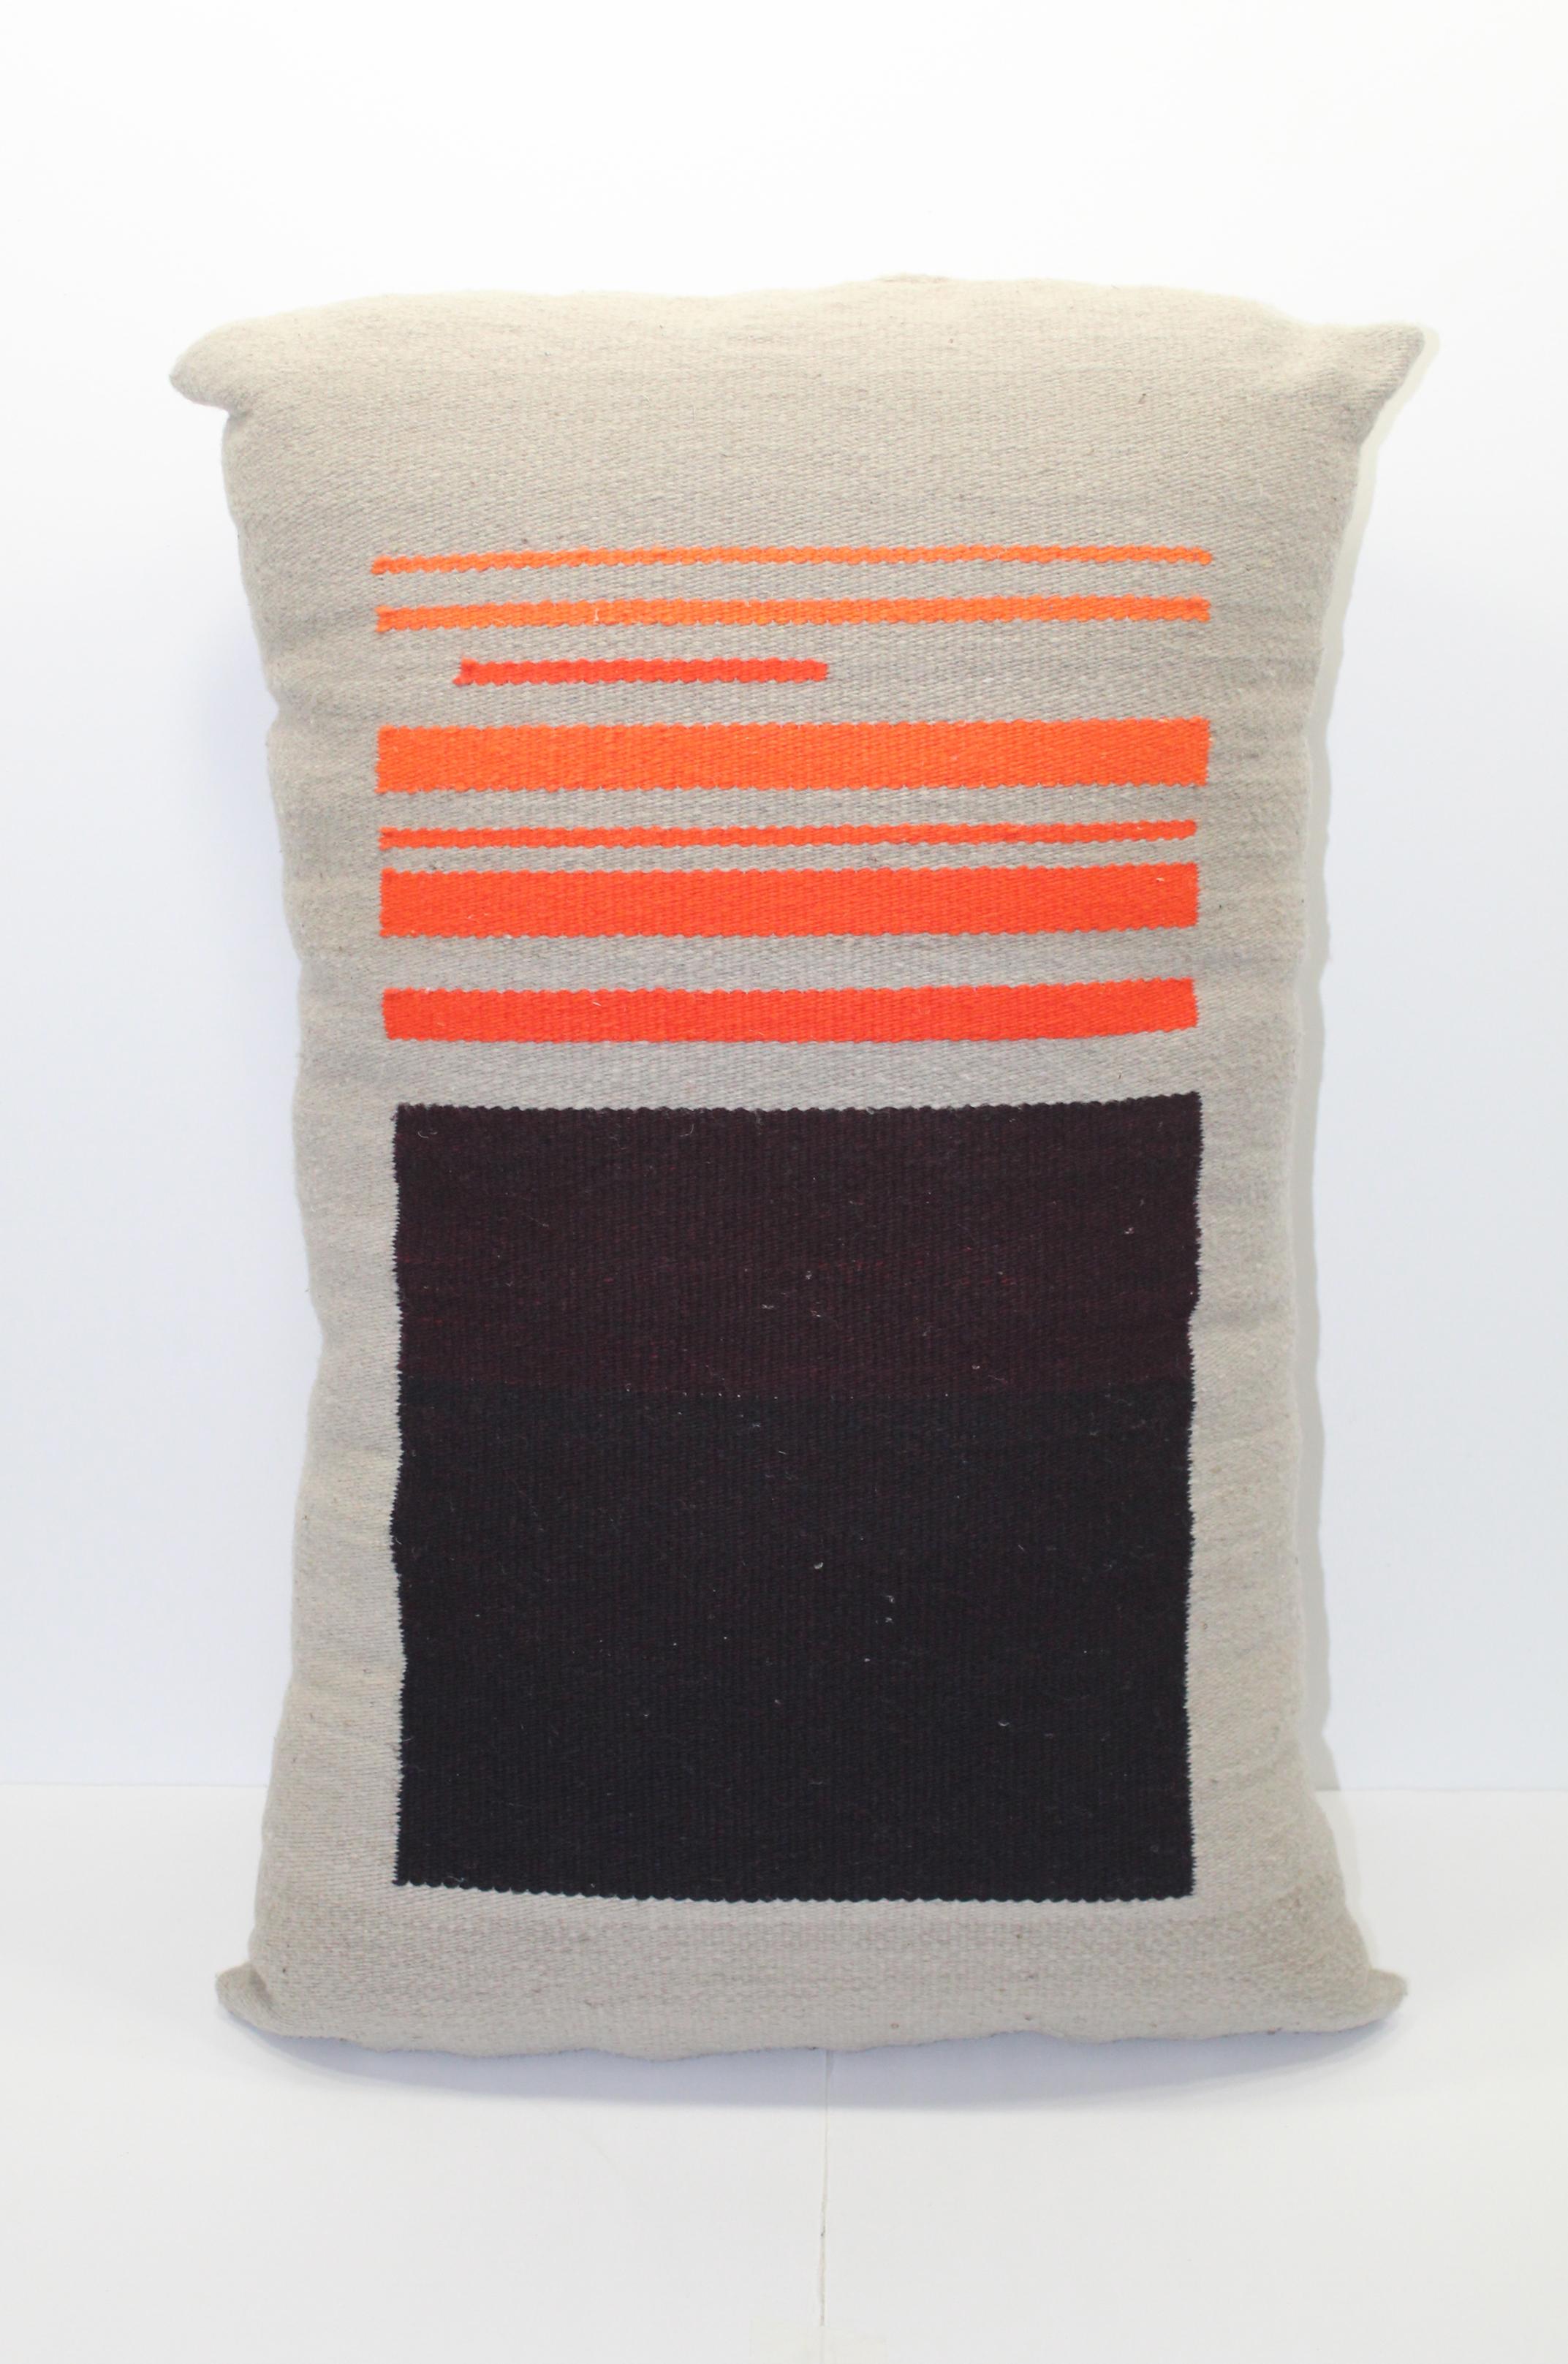 Modern Bespoke Handwoven Wool Throw Pillow, Natural Dye, Red, Orange and Grey